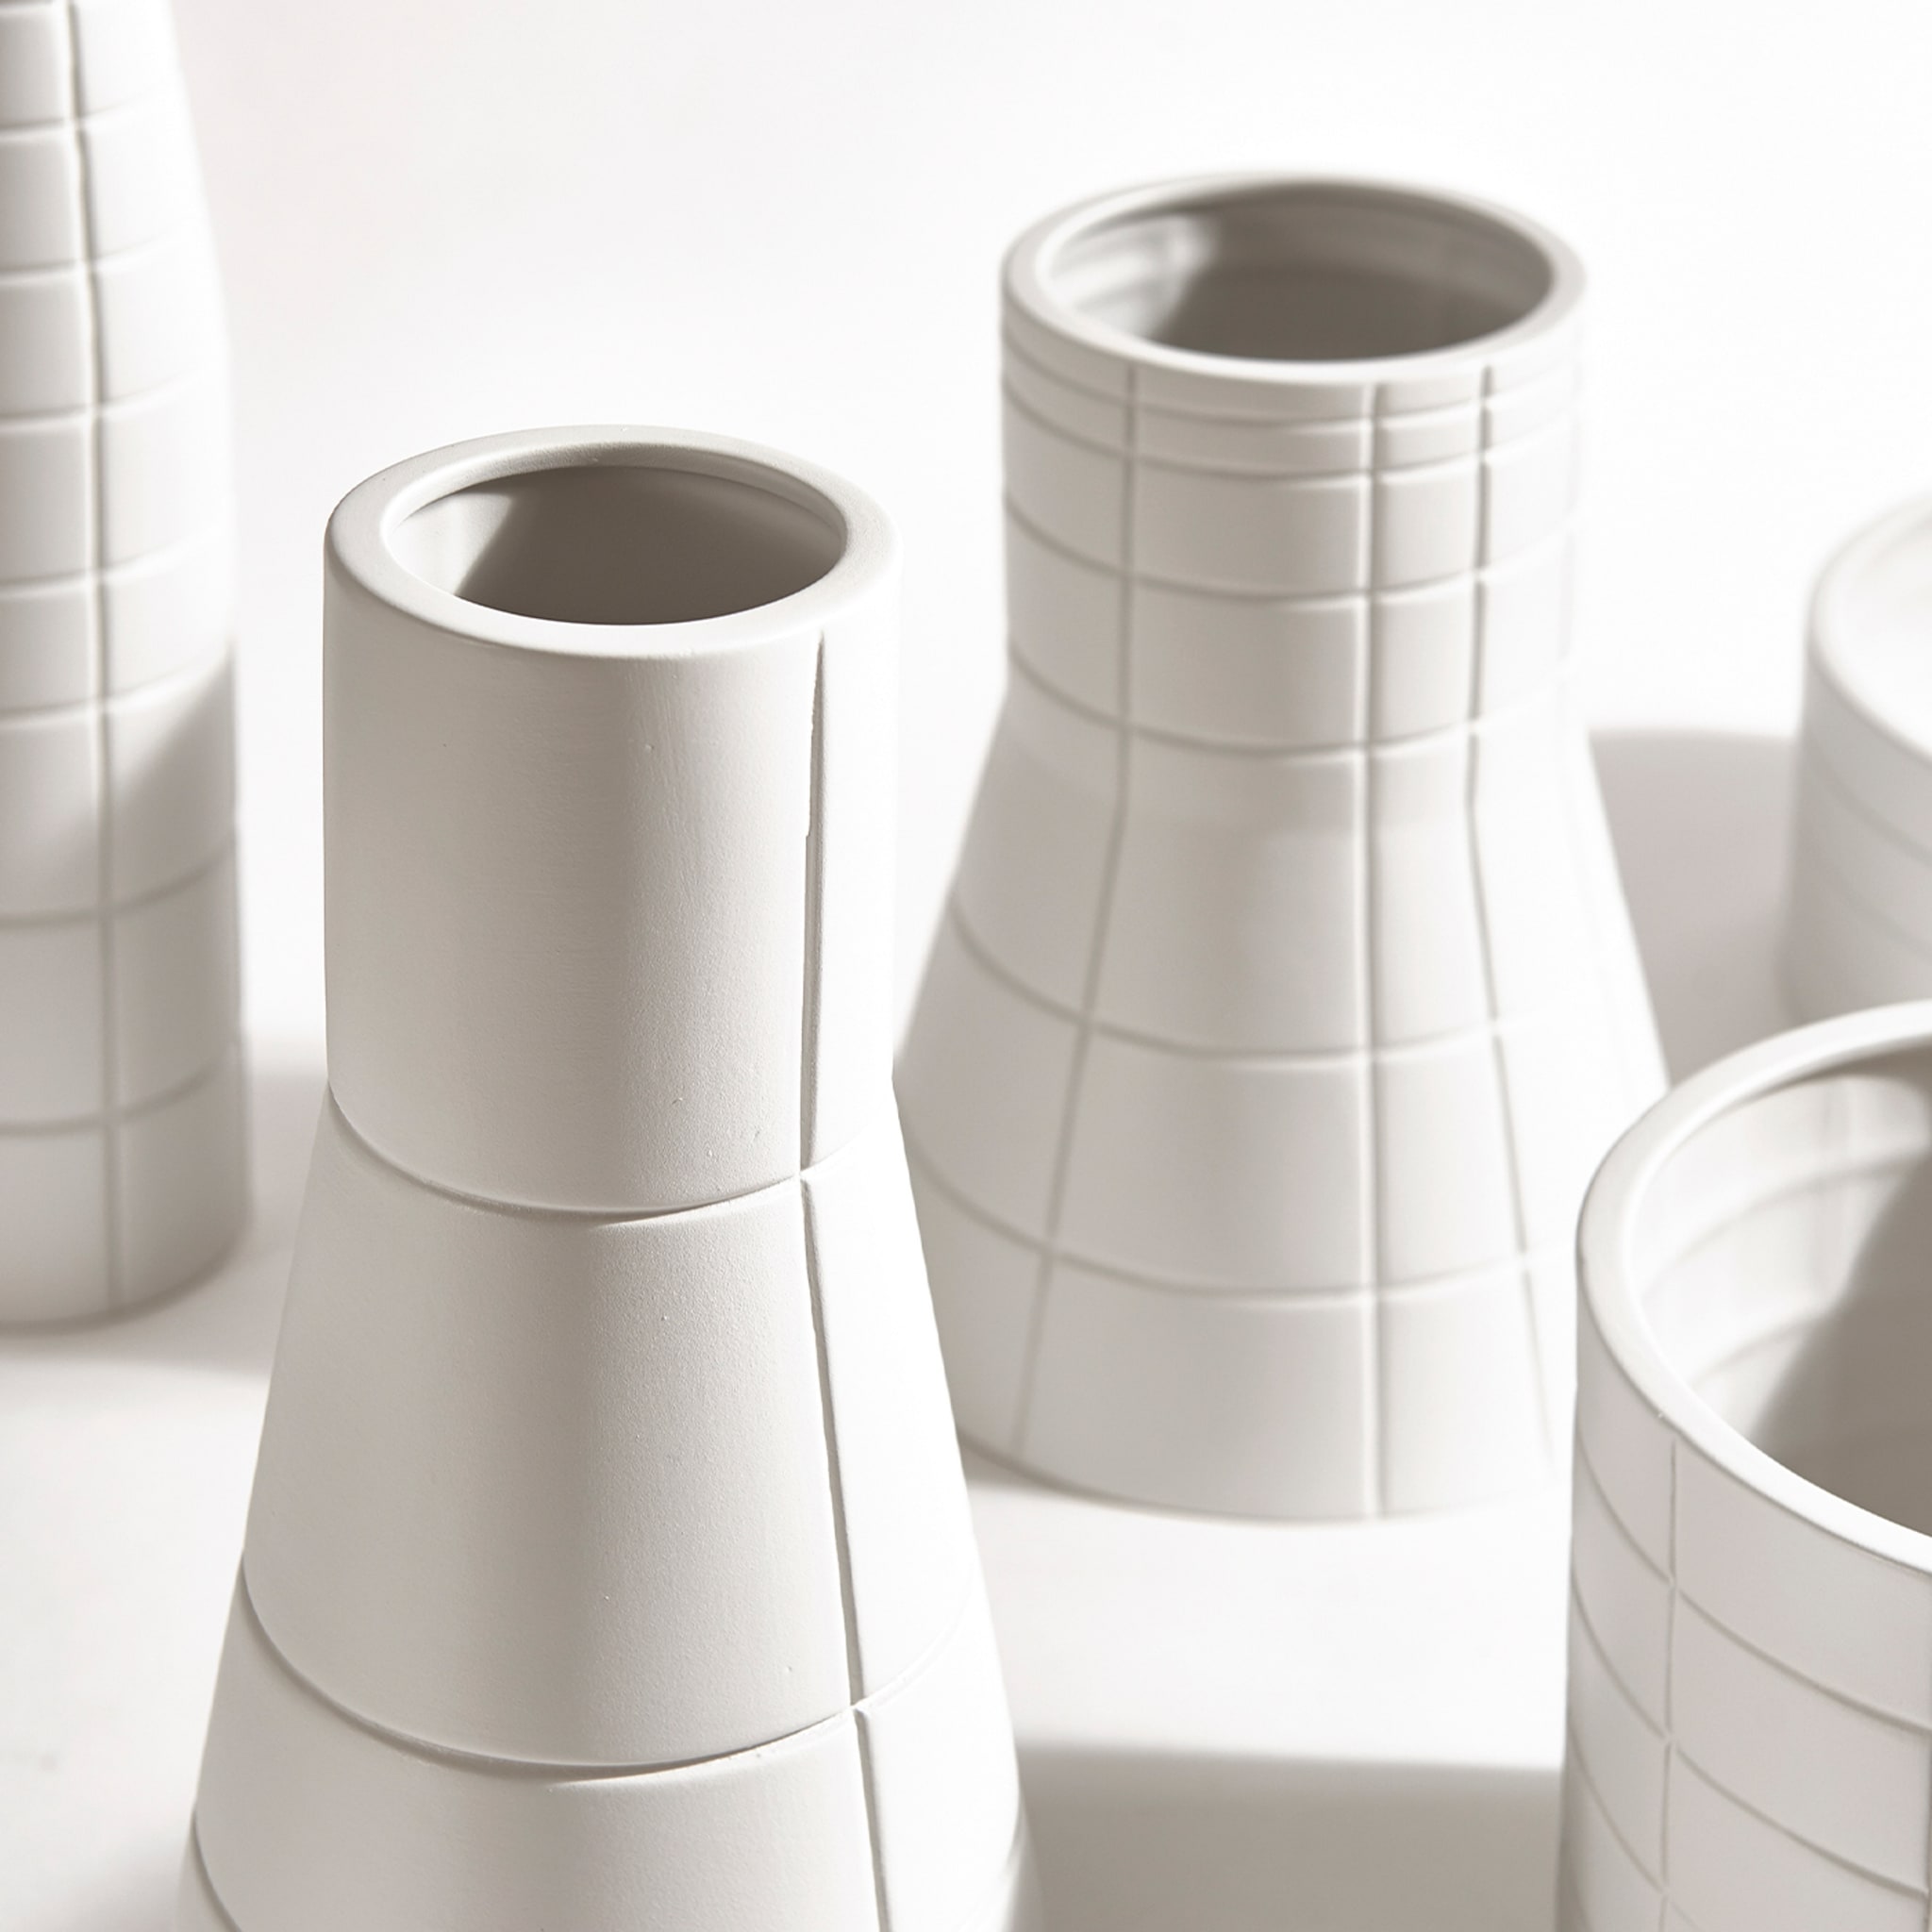 Rikuadra White Ceramic Vase #5 - Alternative view 2